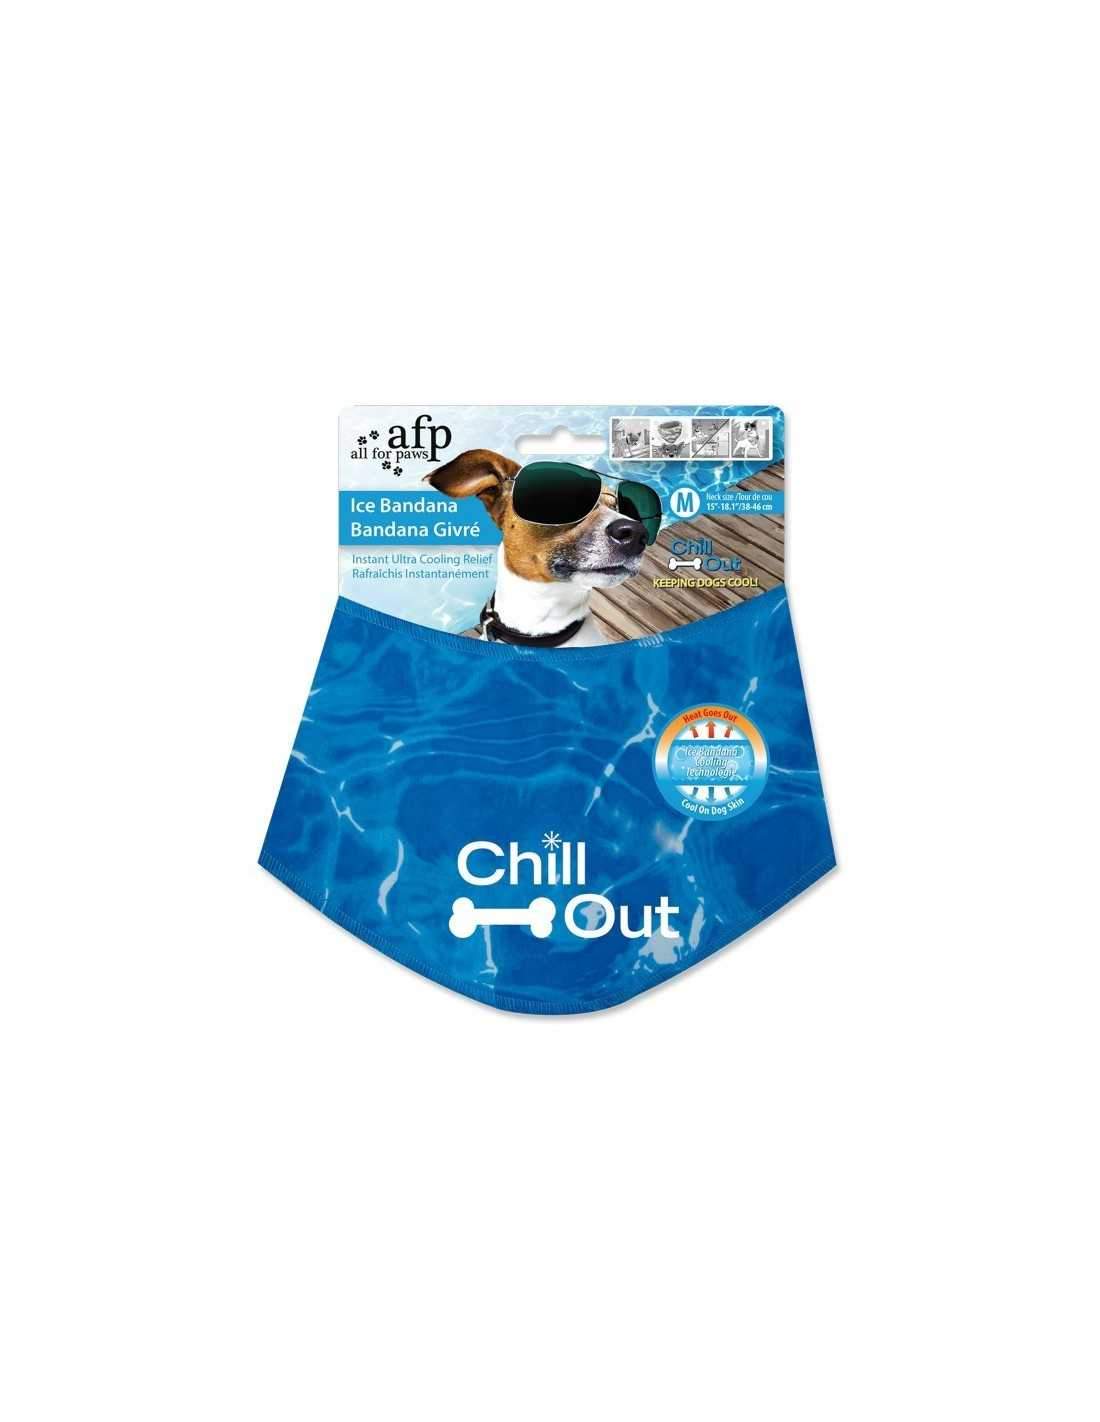 Bandana Chill Out Ice Tienda Petfy S